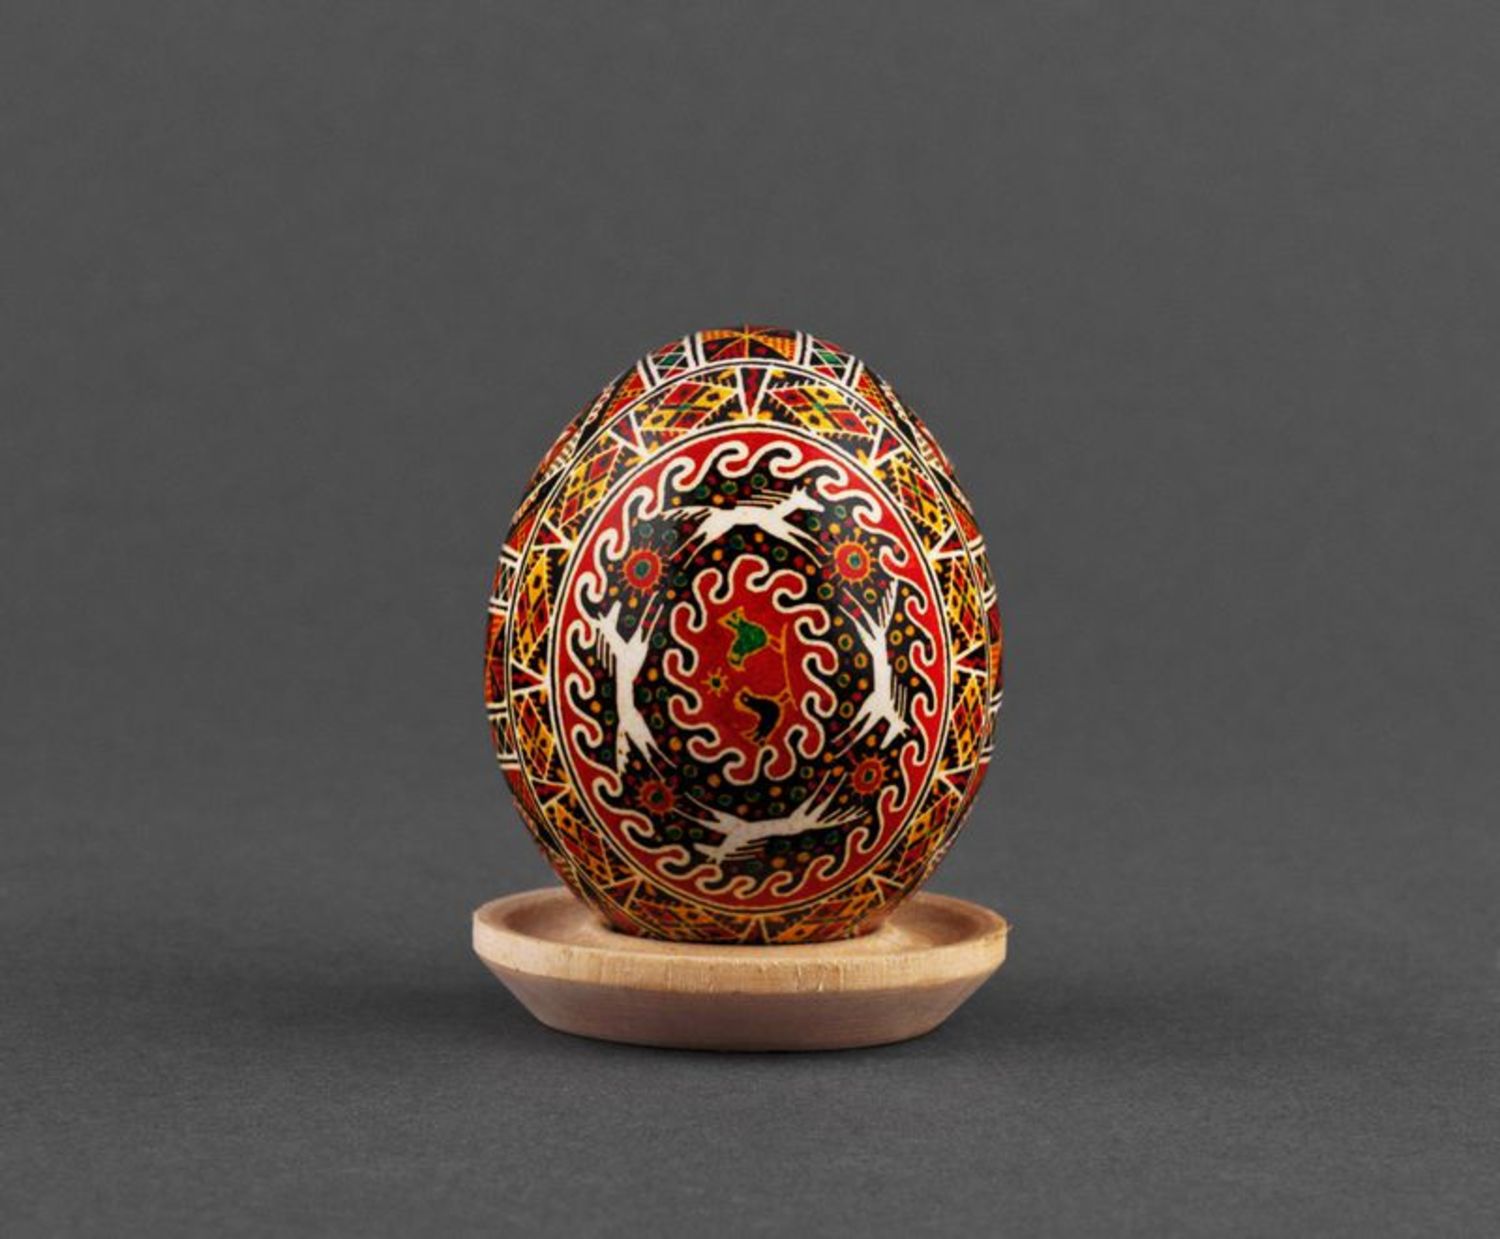 Huevo de pascua hecho a mano con ornamento elemento decorativo souvenir original foto 2